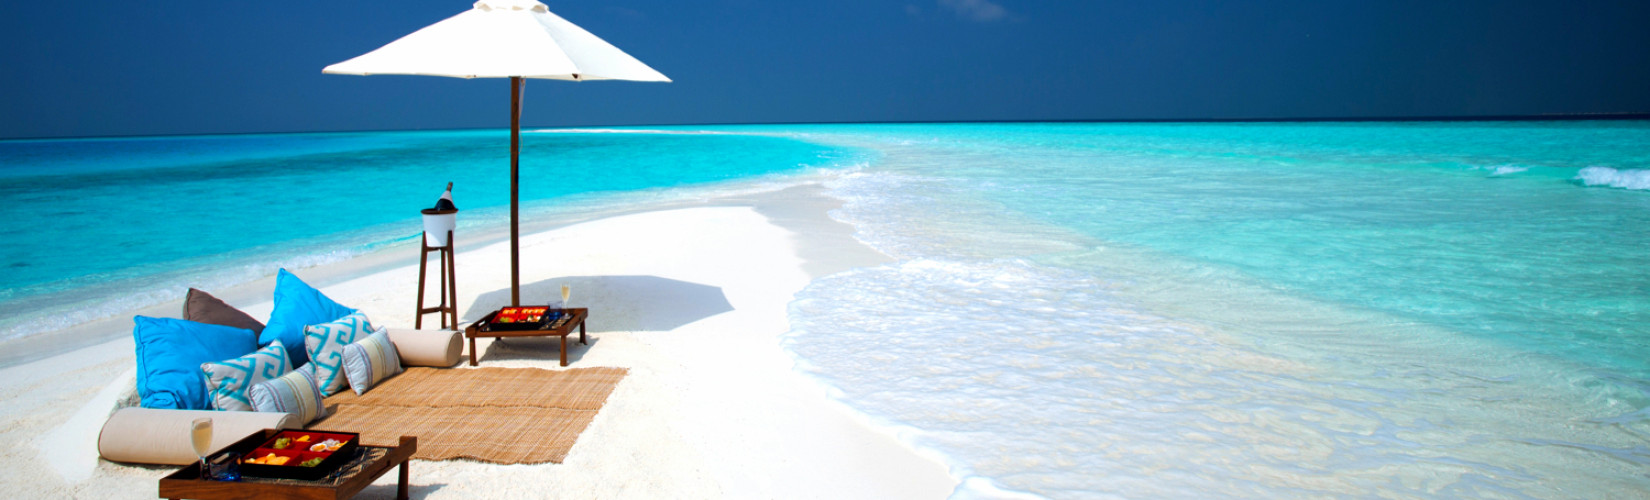 Maldives in Summers: Sun, Sea and Serenity